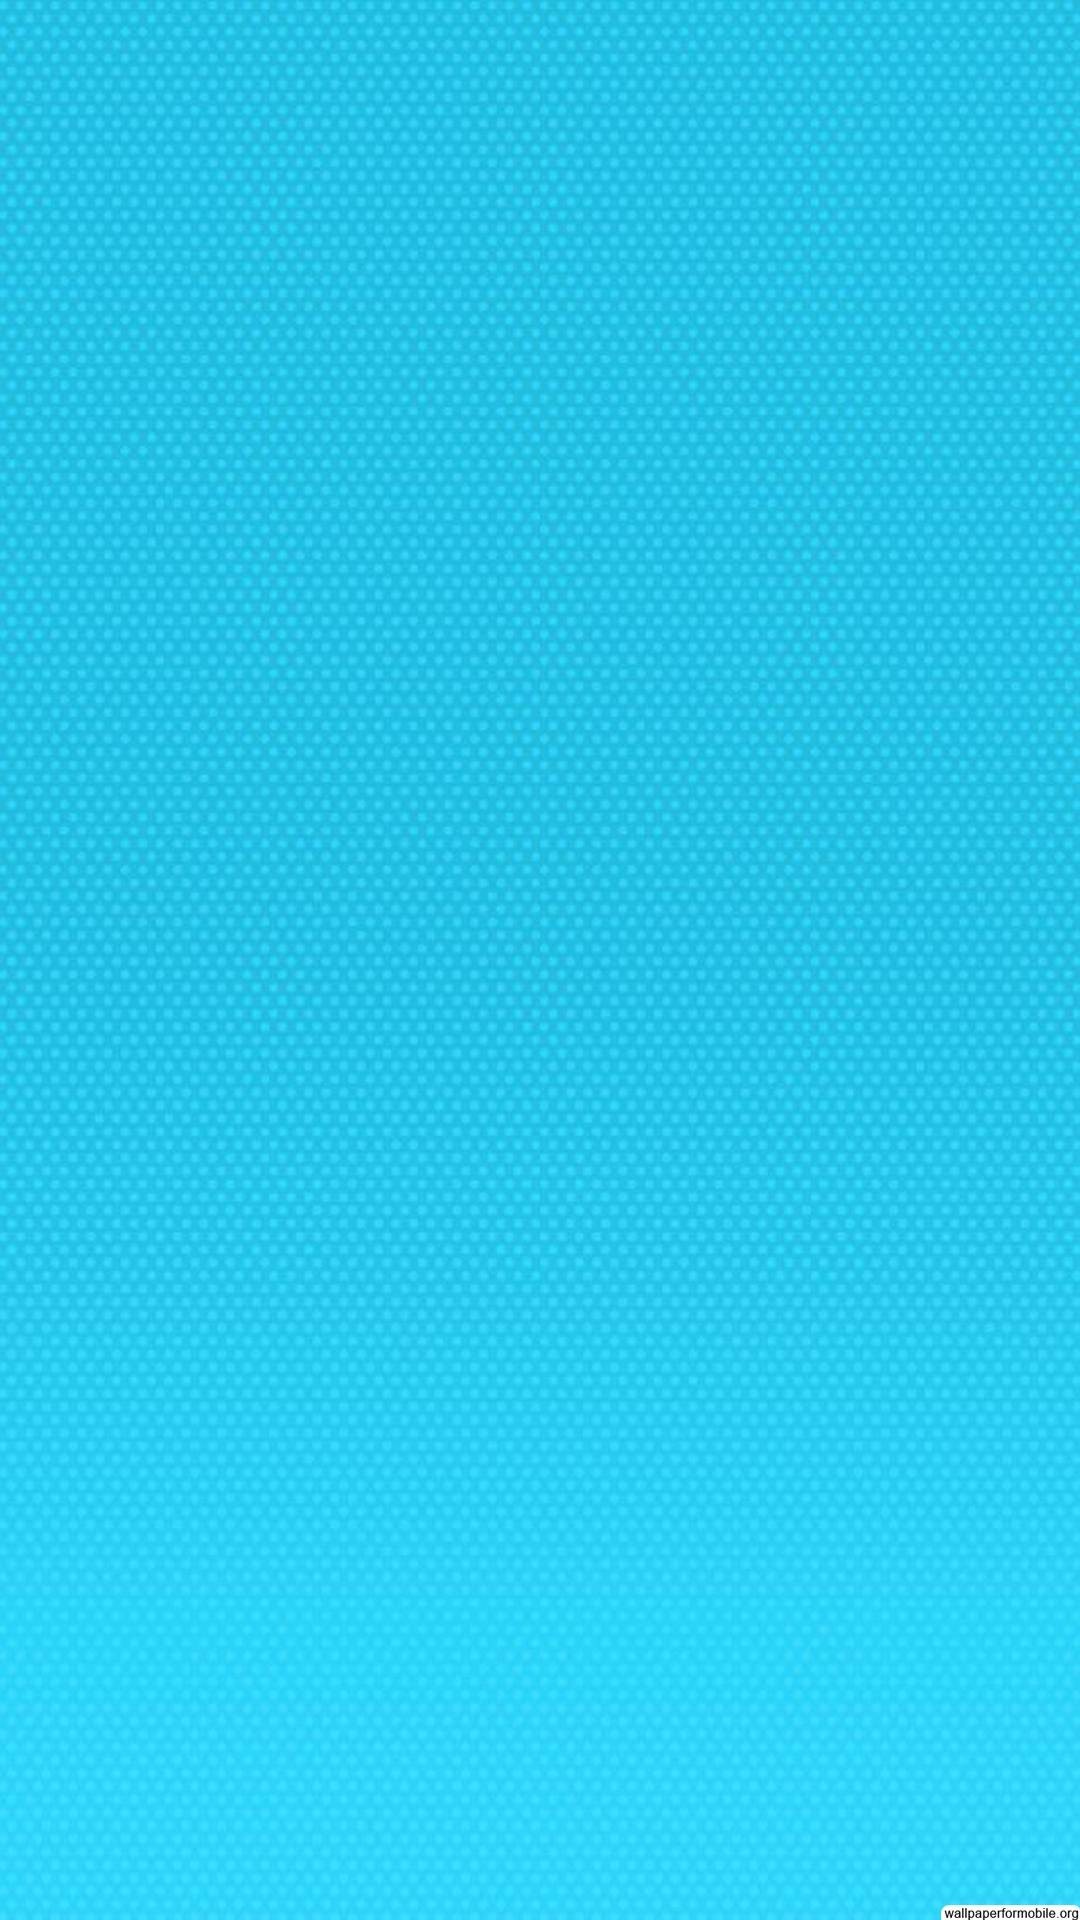 45+] Light Blue iPhone Wallpaper - WallpaperSafari